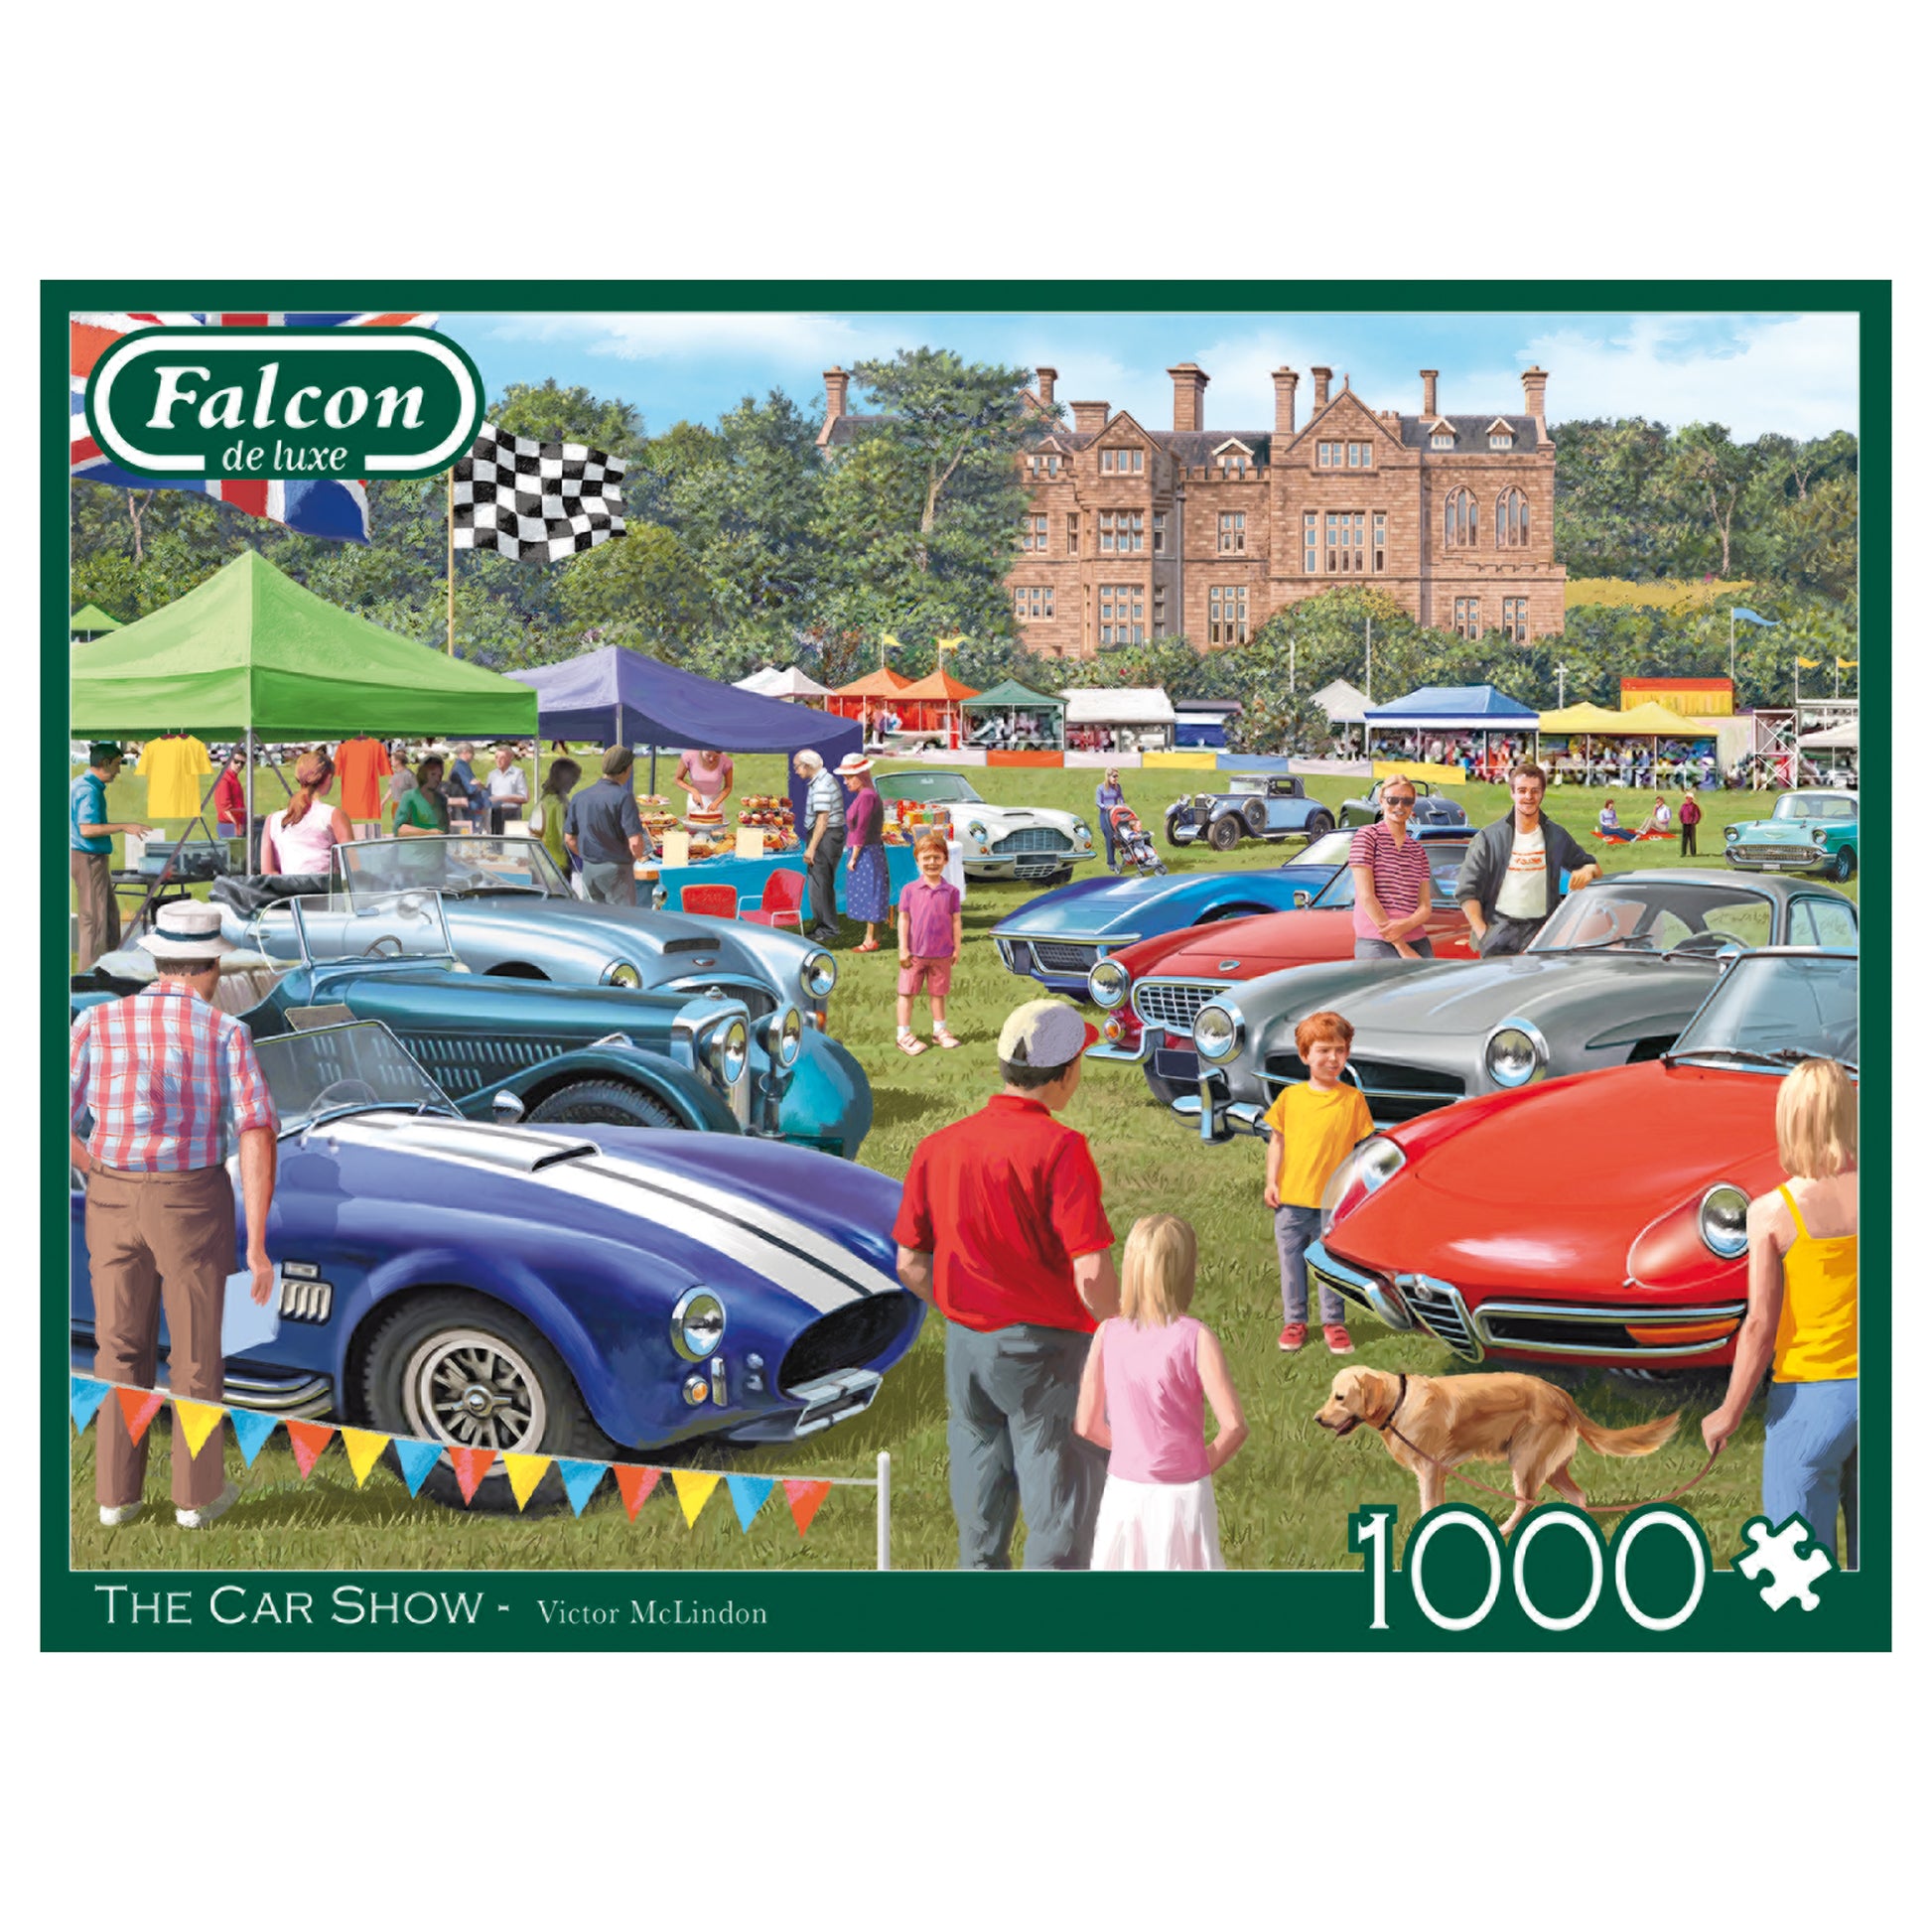 Falcon - The Car Show (1000 pieces) - product image - Jumboplay.com